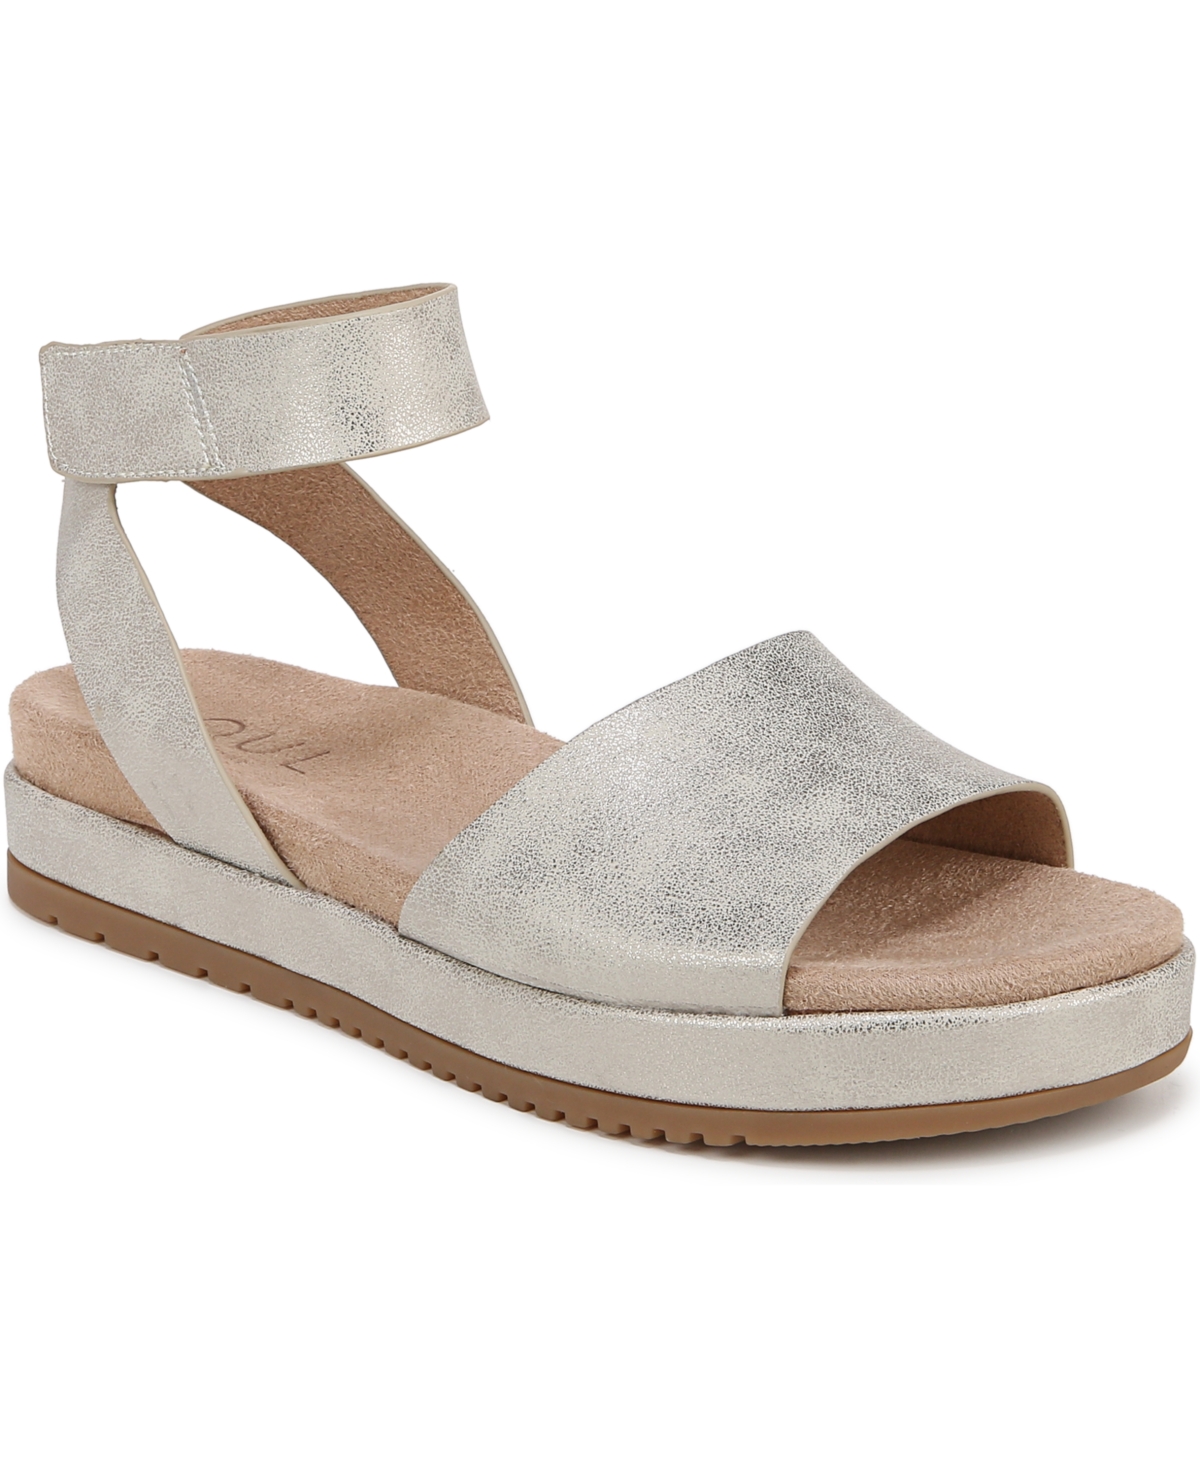 Deara Ankle Strap Flatform Sandals - Light Gold Faux Leather